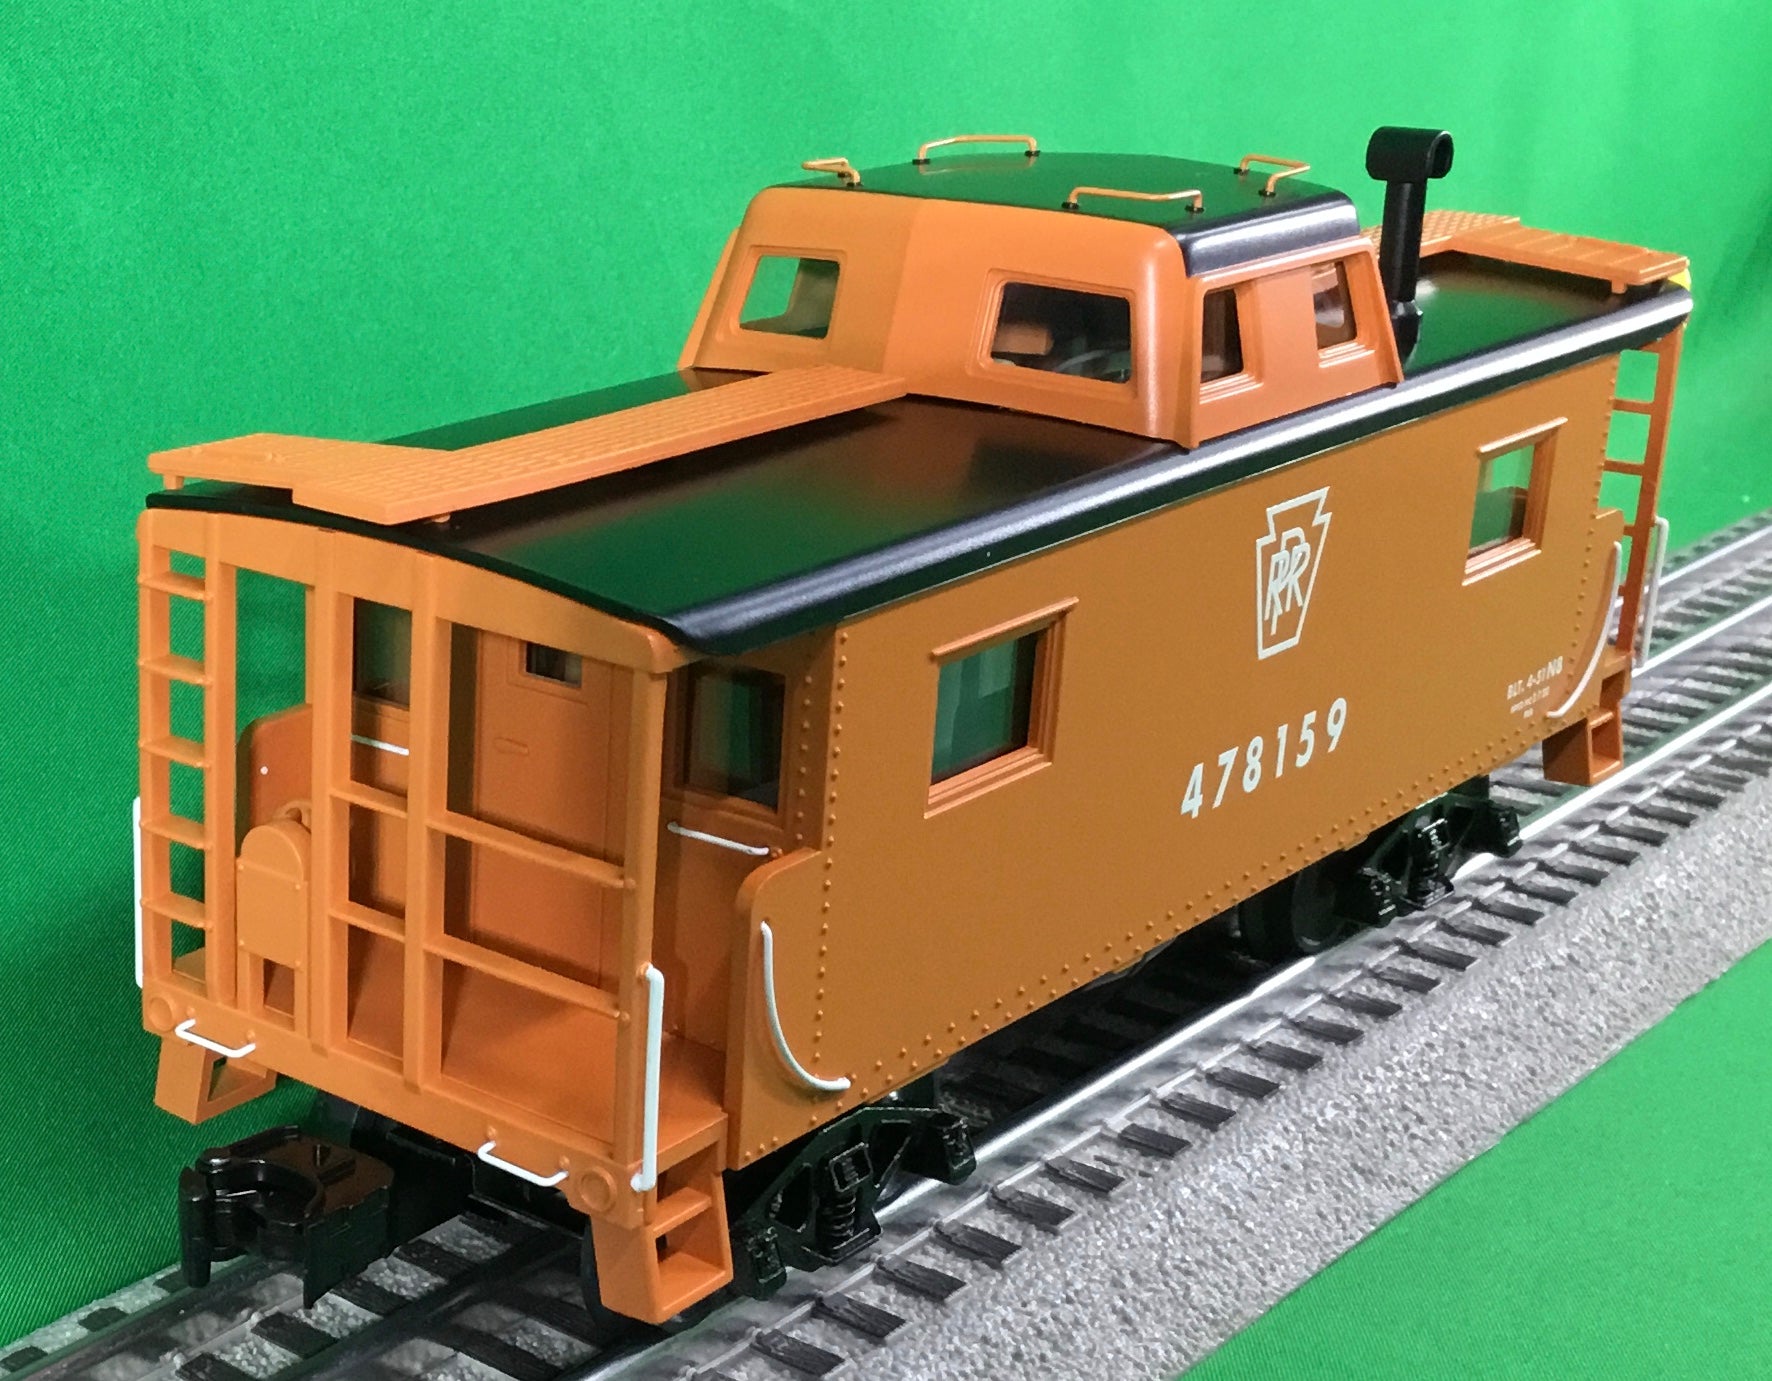 Lionel 2326530 - N8 Cabin Car "Pennsylvania Railroad" #478159